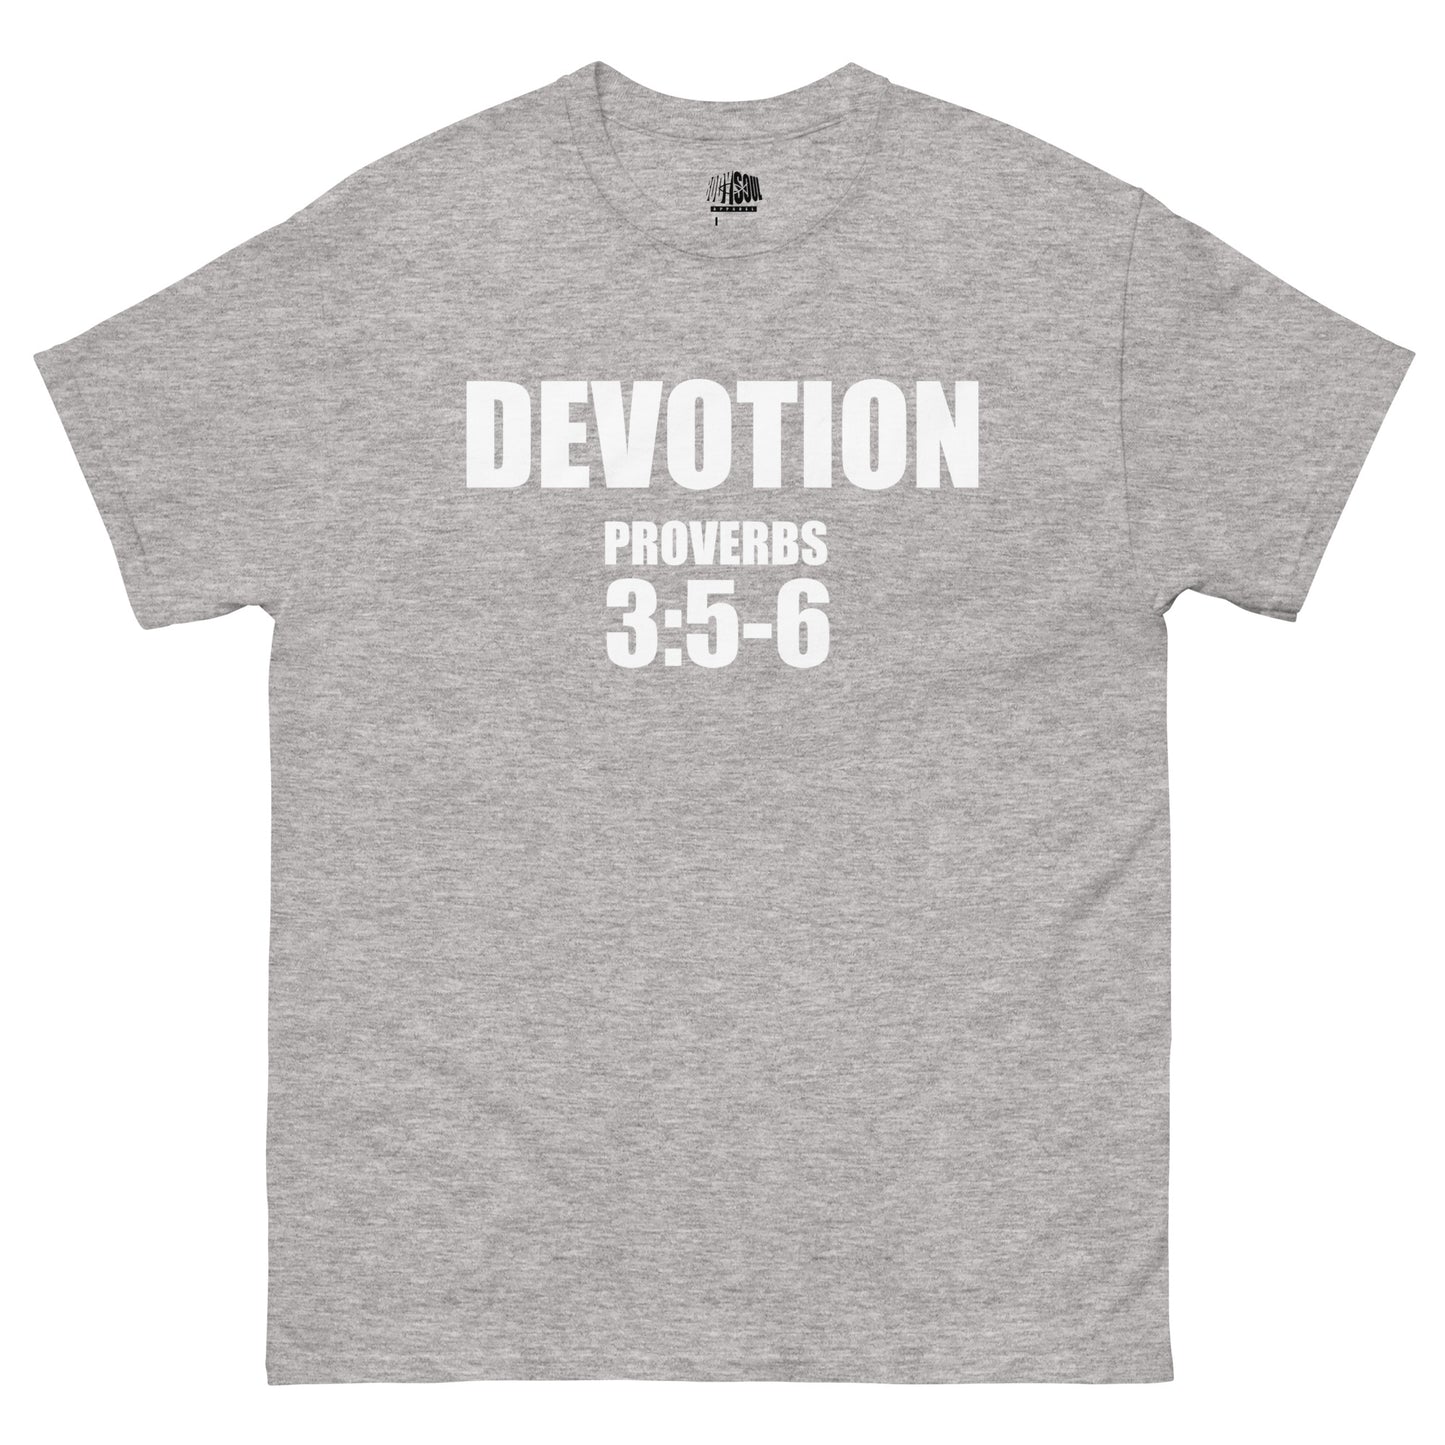 DEVOTION 3:5-6